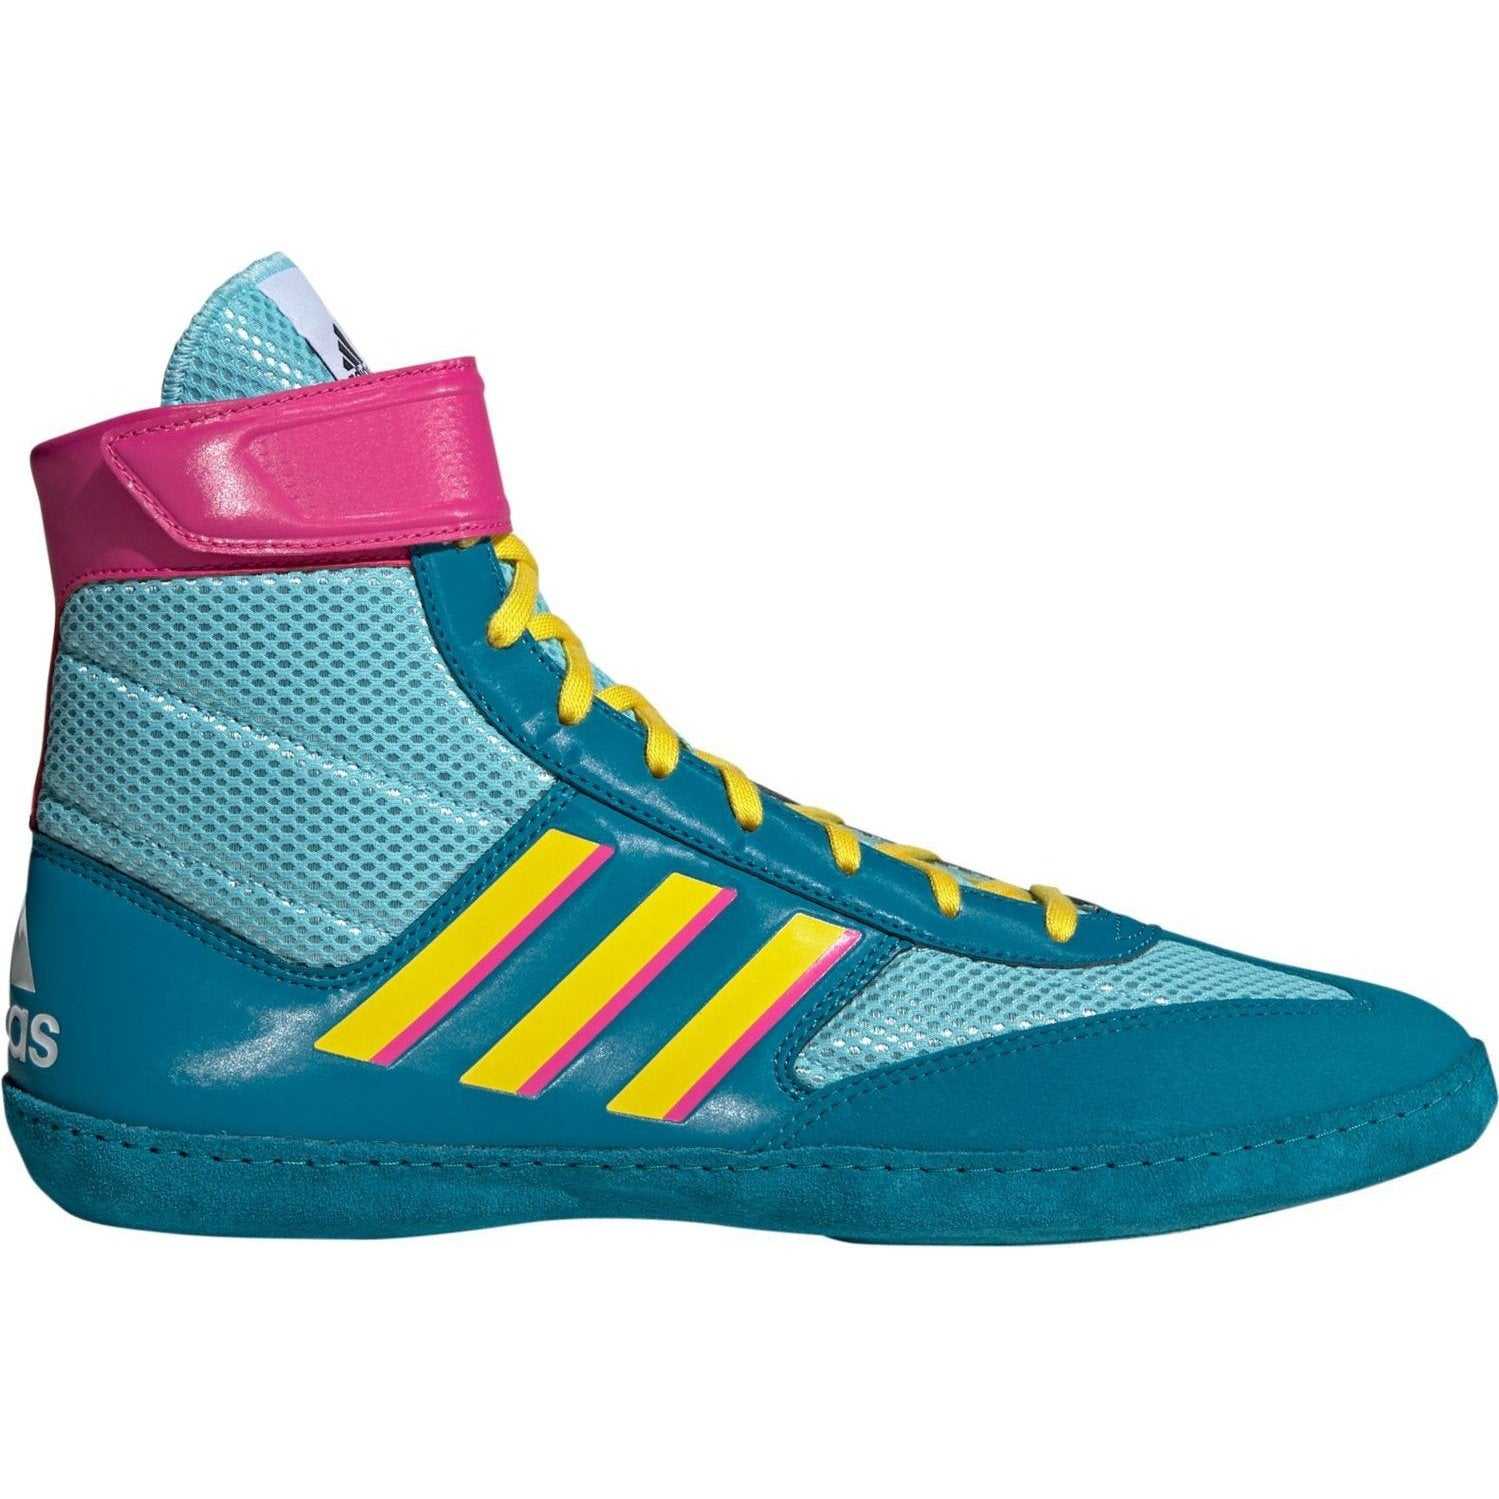 Adidas 224 Speed 5 Wrestling Shoes Aqua Teal